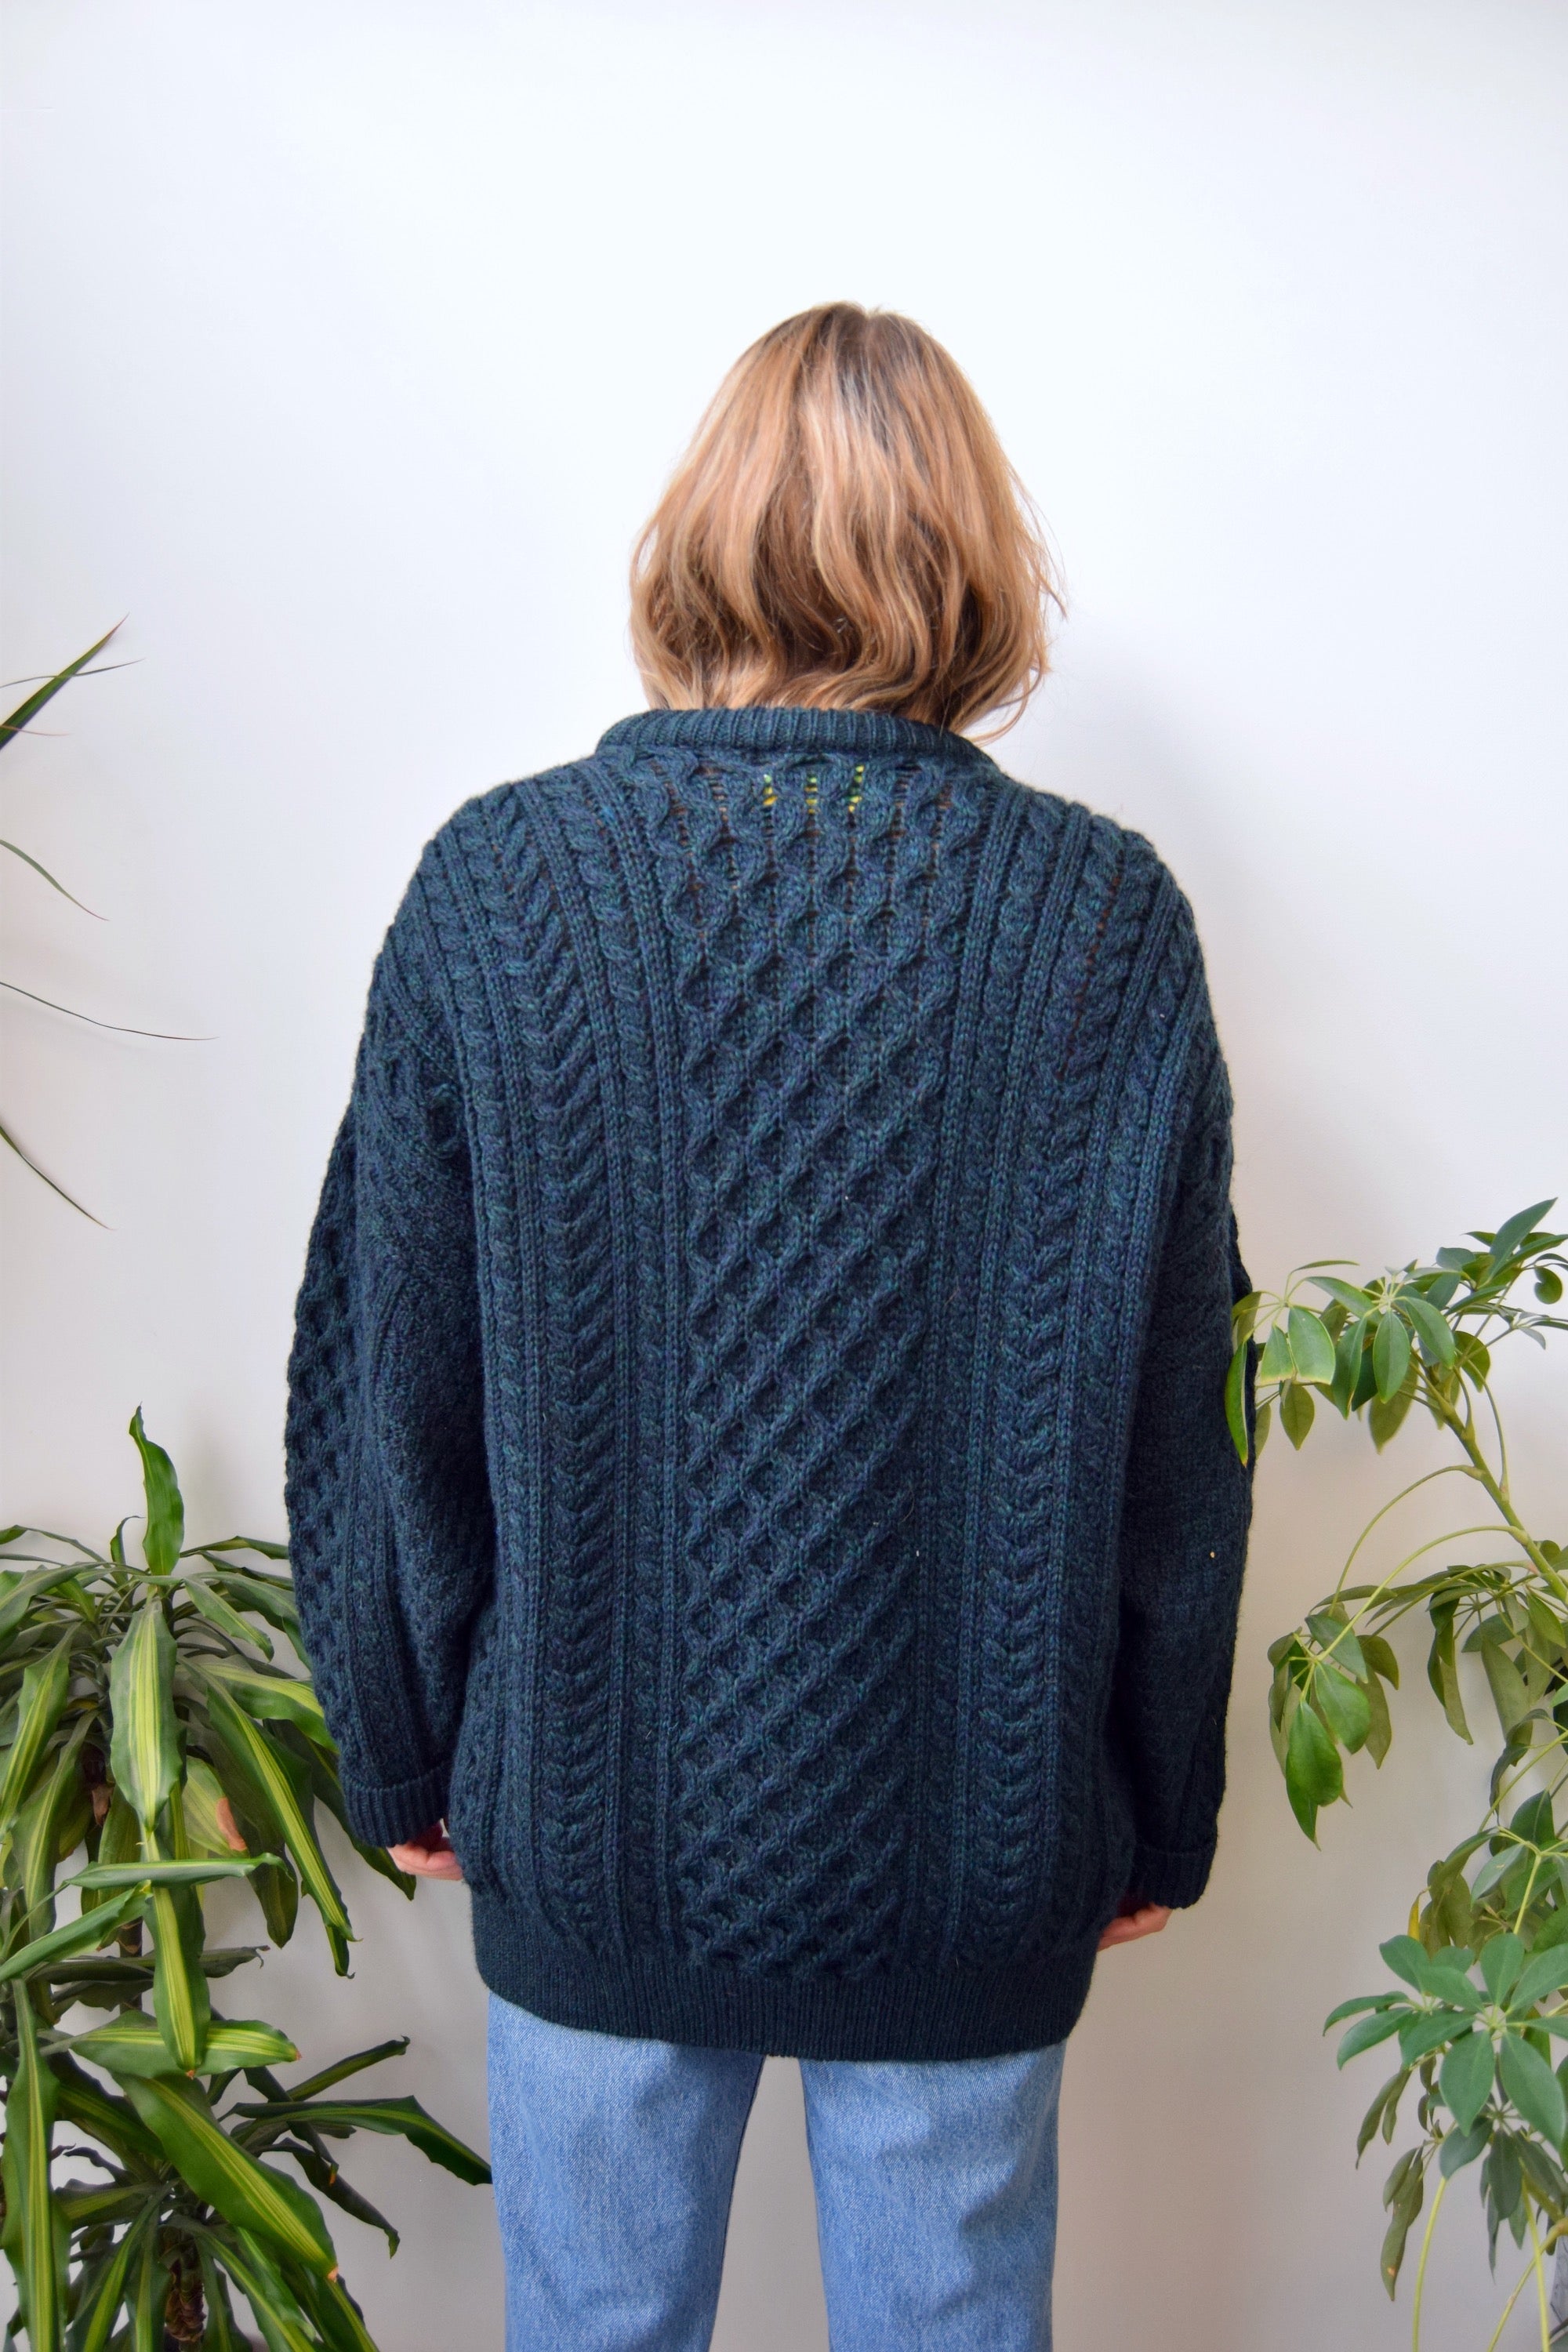 Pine Irish Knit Sweater